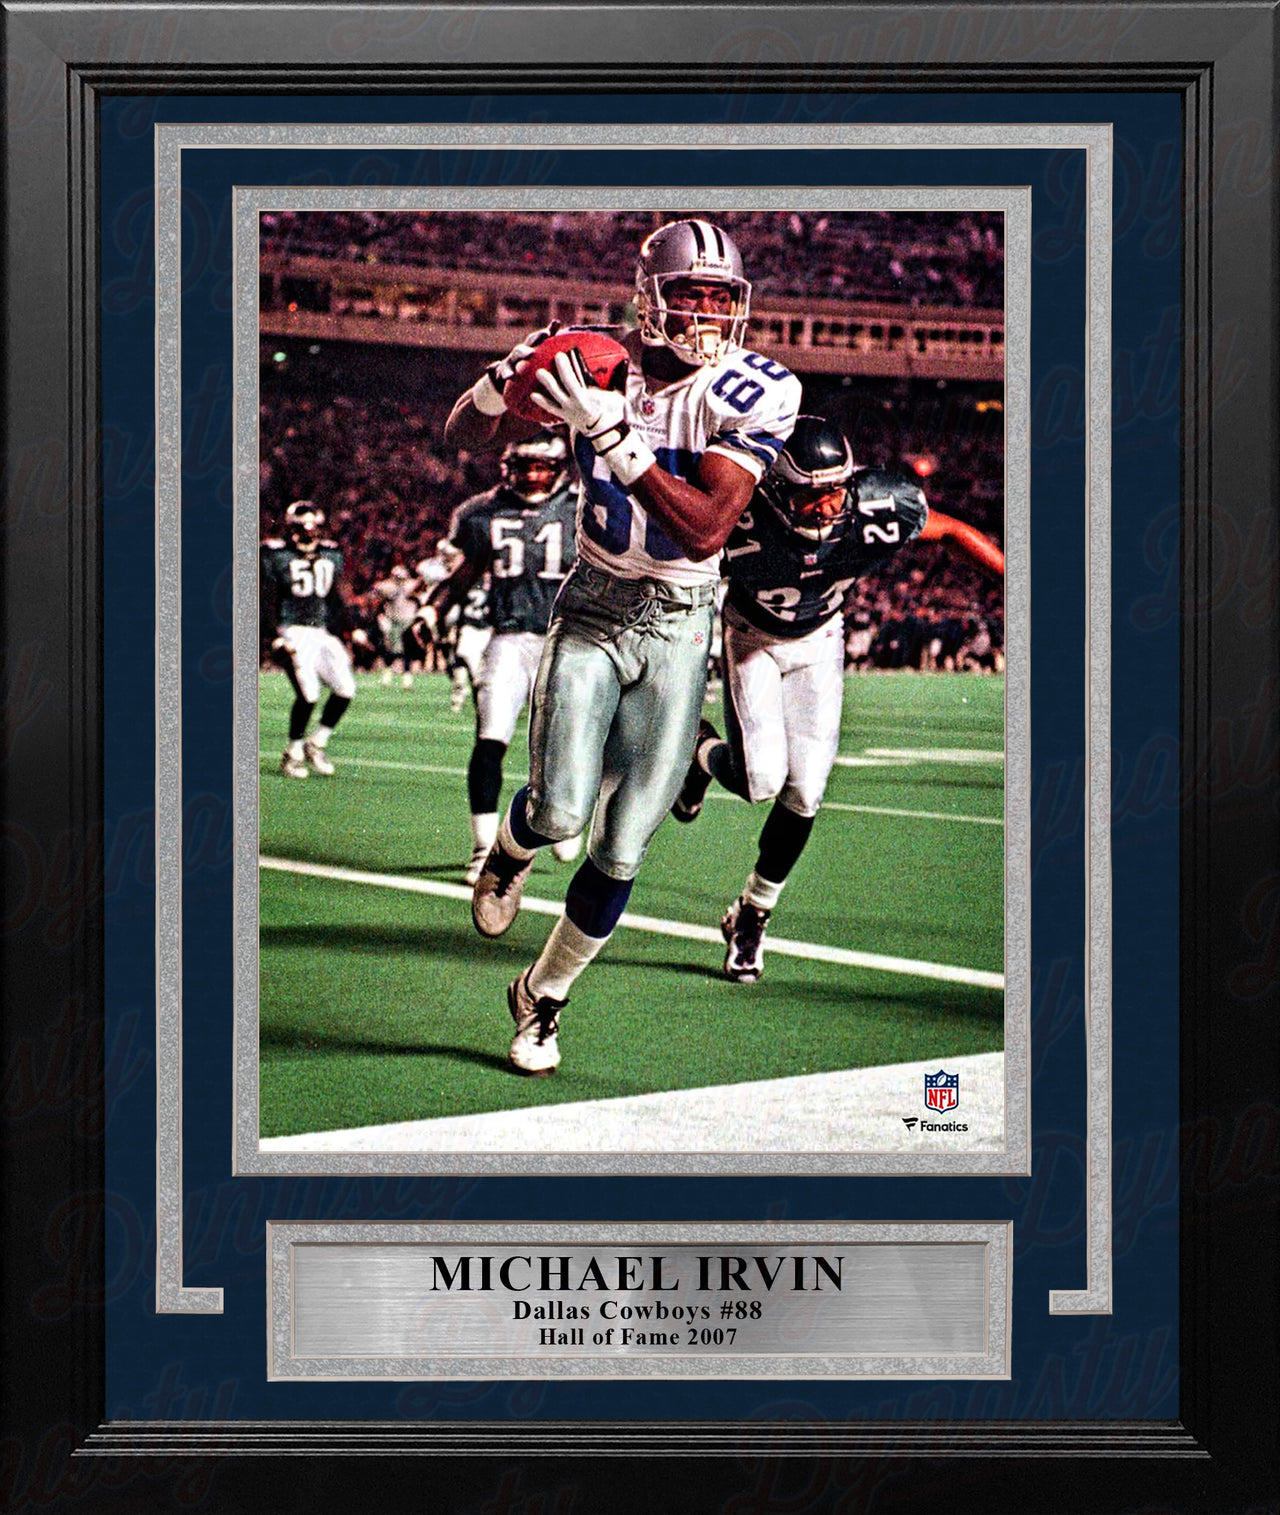 Michael Irvin v. The Eagles Dallas Cowboys 8" x 10" Framed Football Photo - Dynasty Sports & Framing 